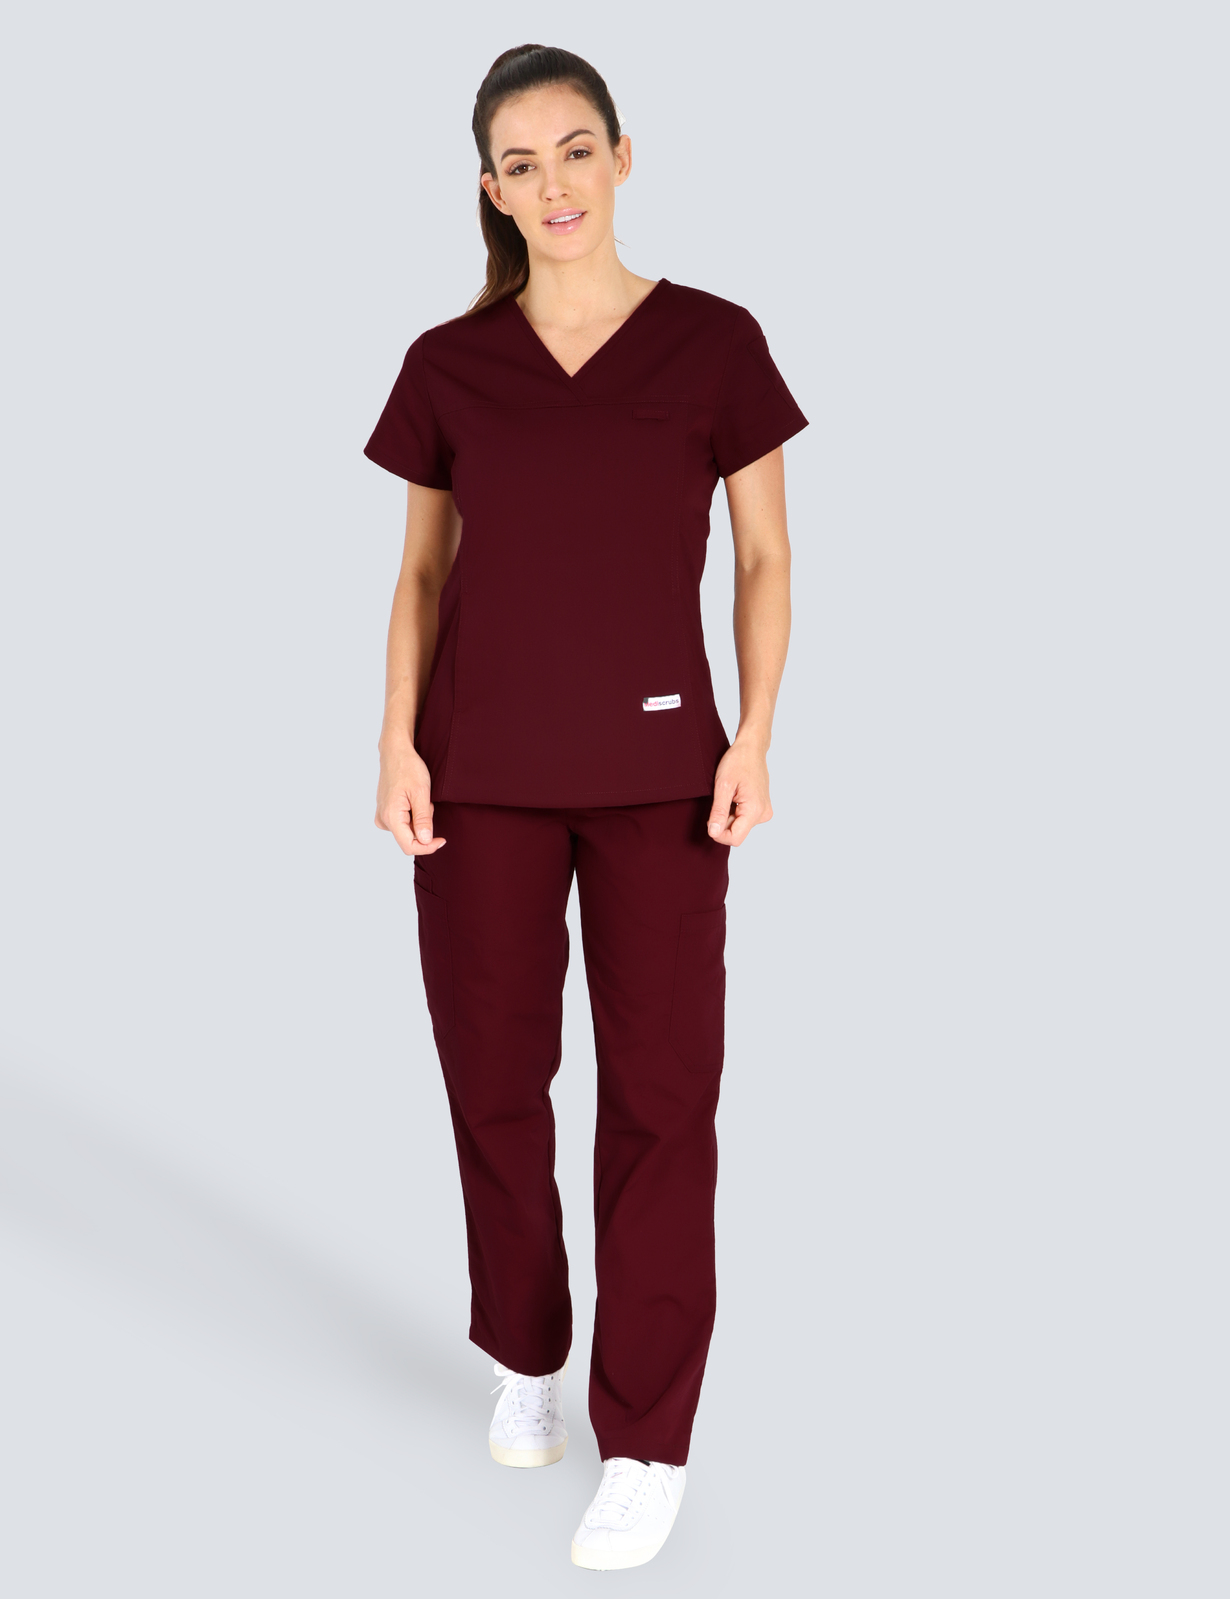 Moranbah Hospital Nursing Uniform Set Bundle (Women's Fit Solid Top and Cargo Pants in Burgundy incl Logo)